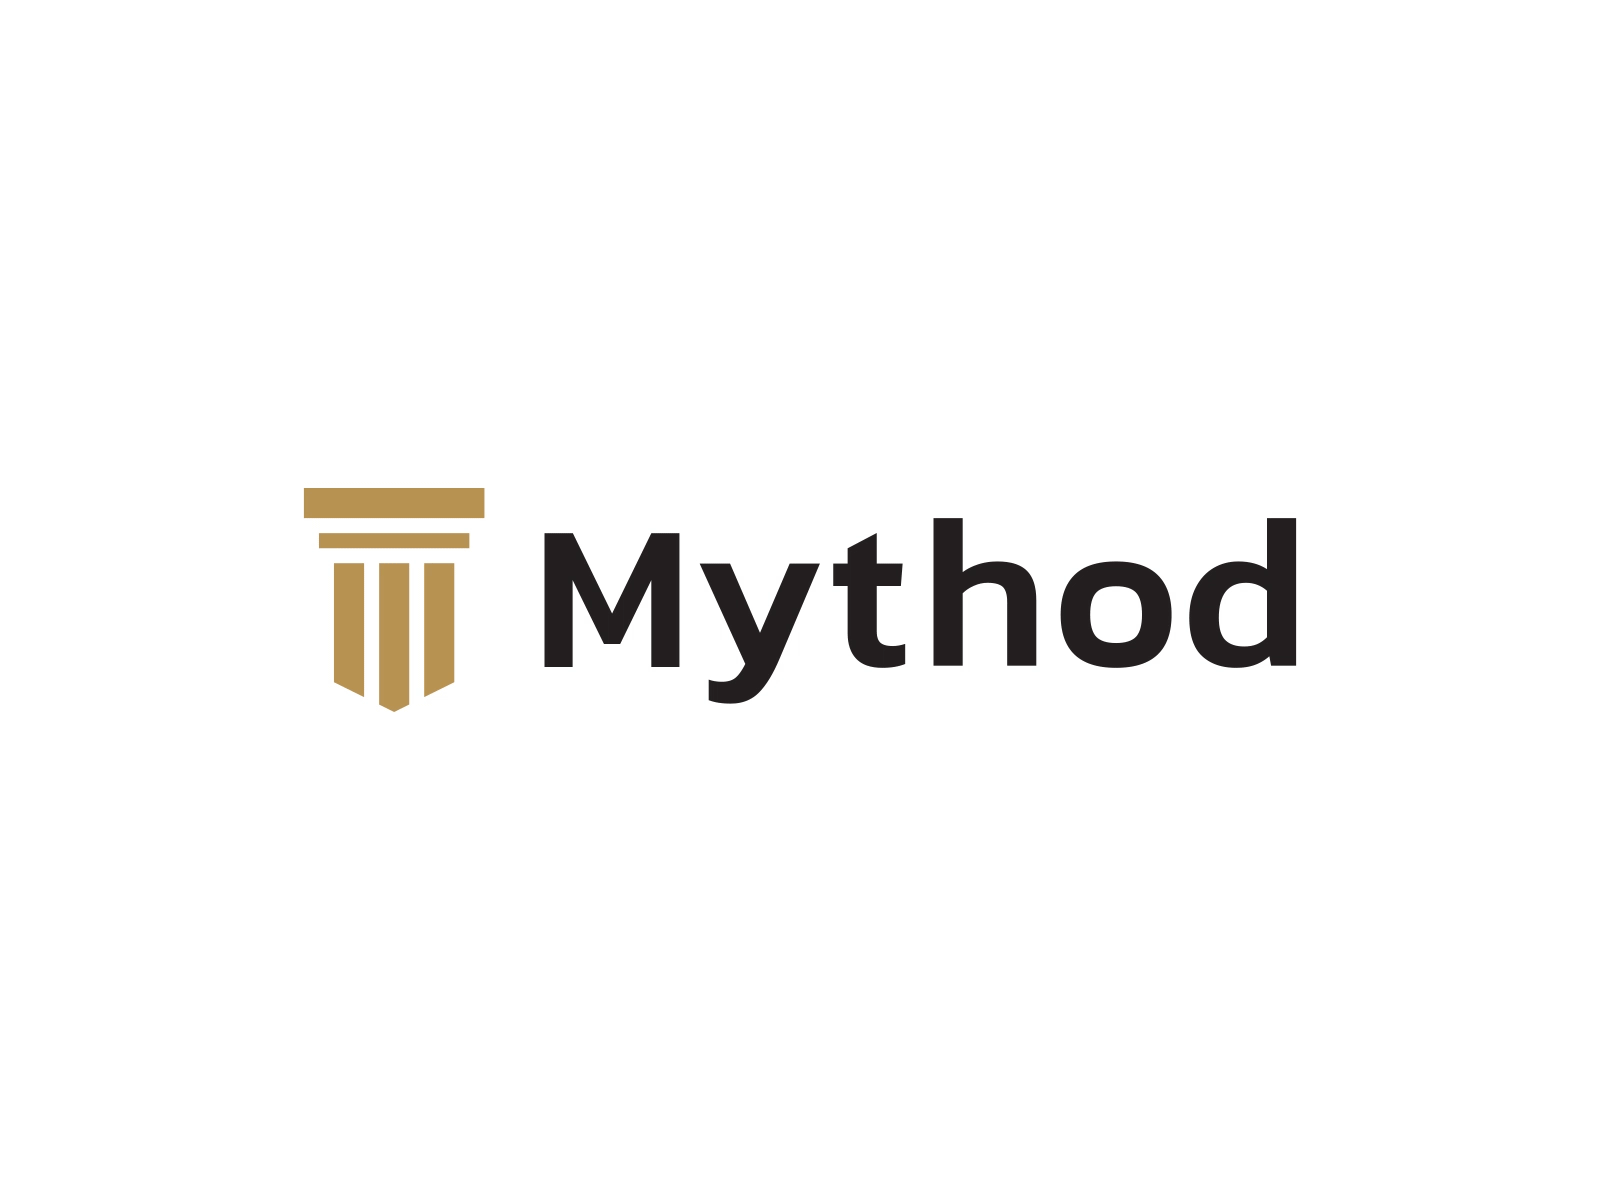 Mythod